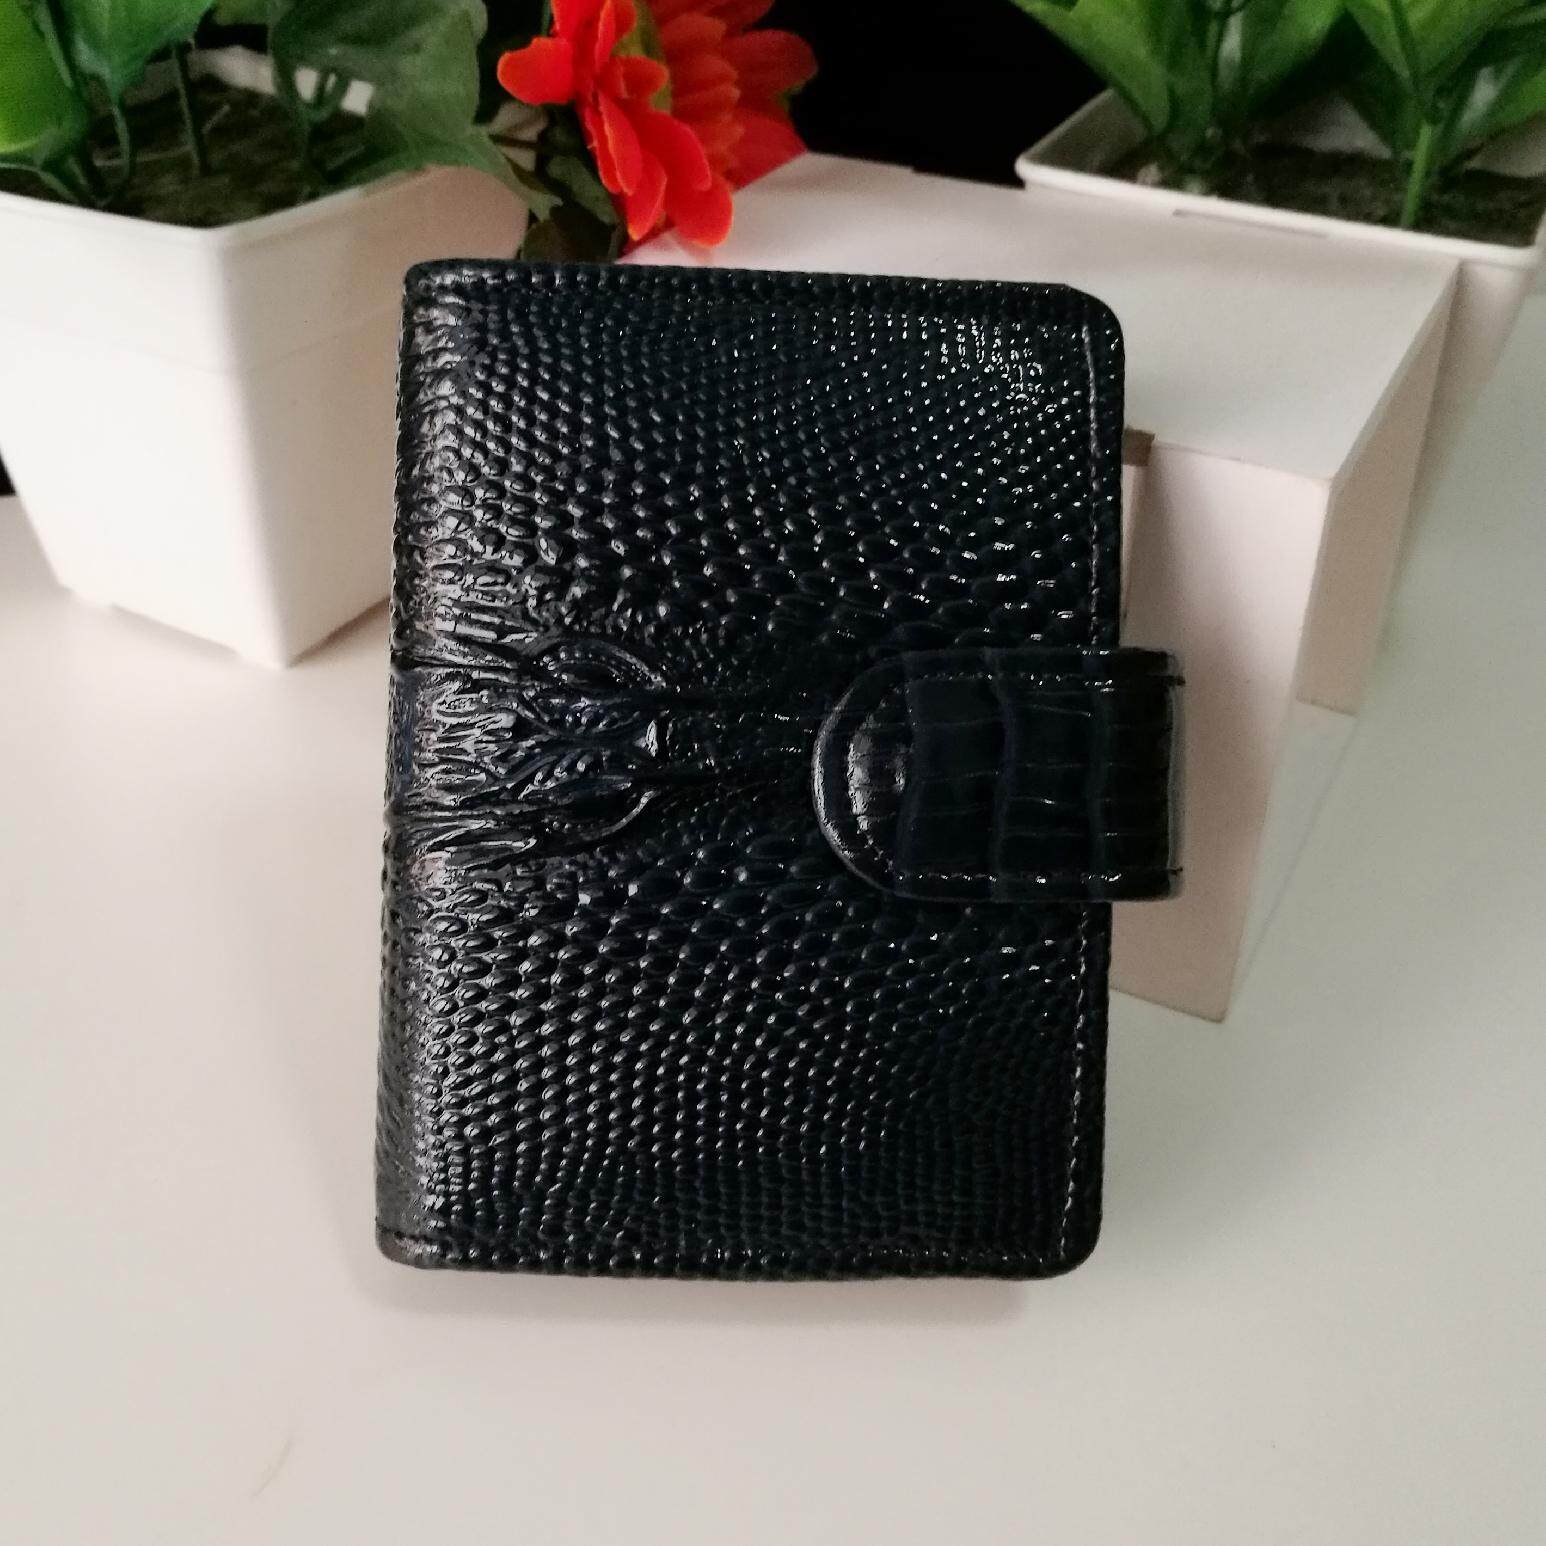 Leather Best Style กระเป๋าใส่บัตร 20+ ใส่เงิน หนังอัดลายจระเข้ รุ่น C011-20M